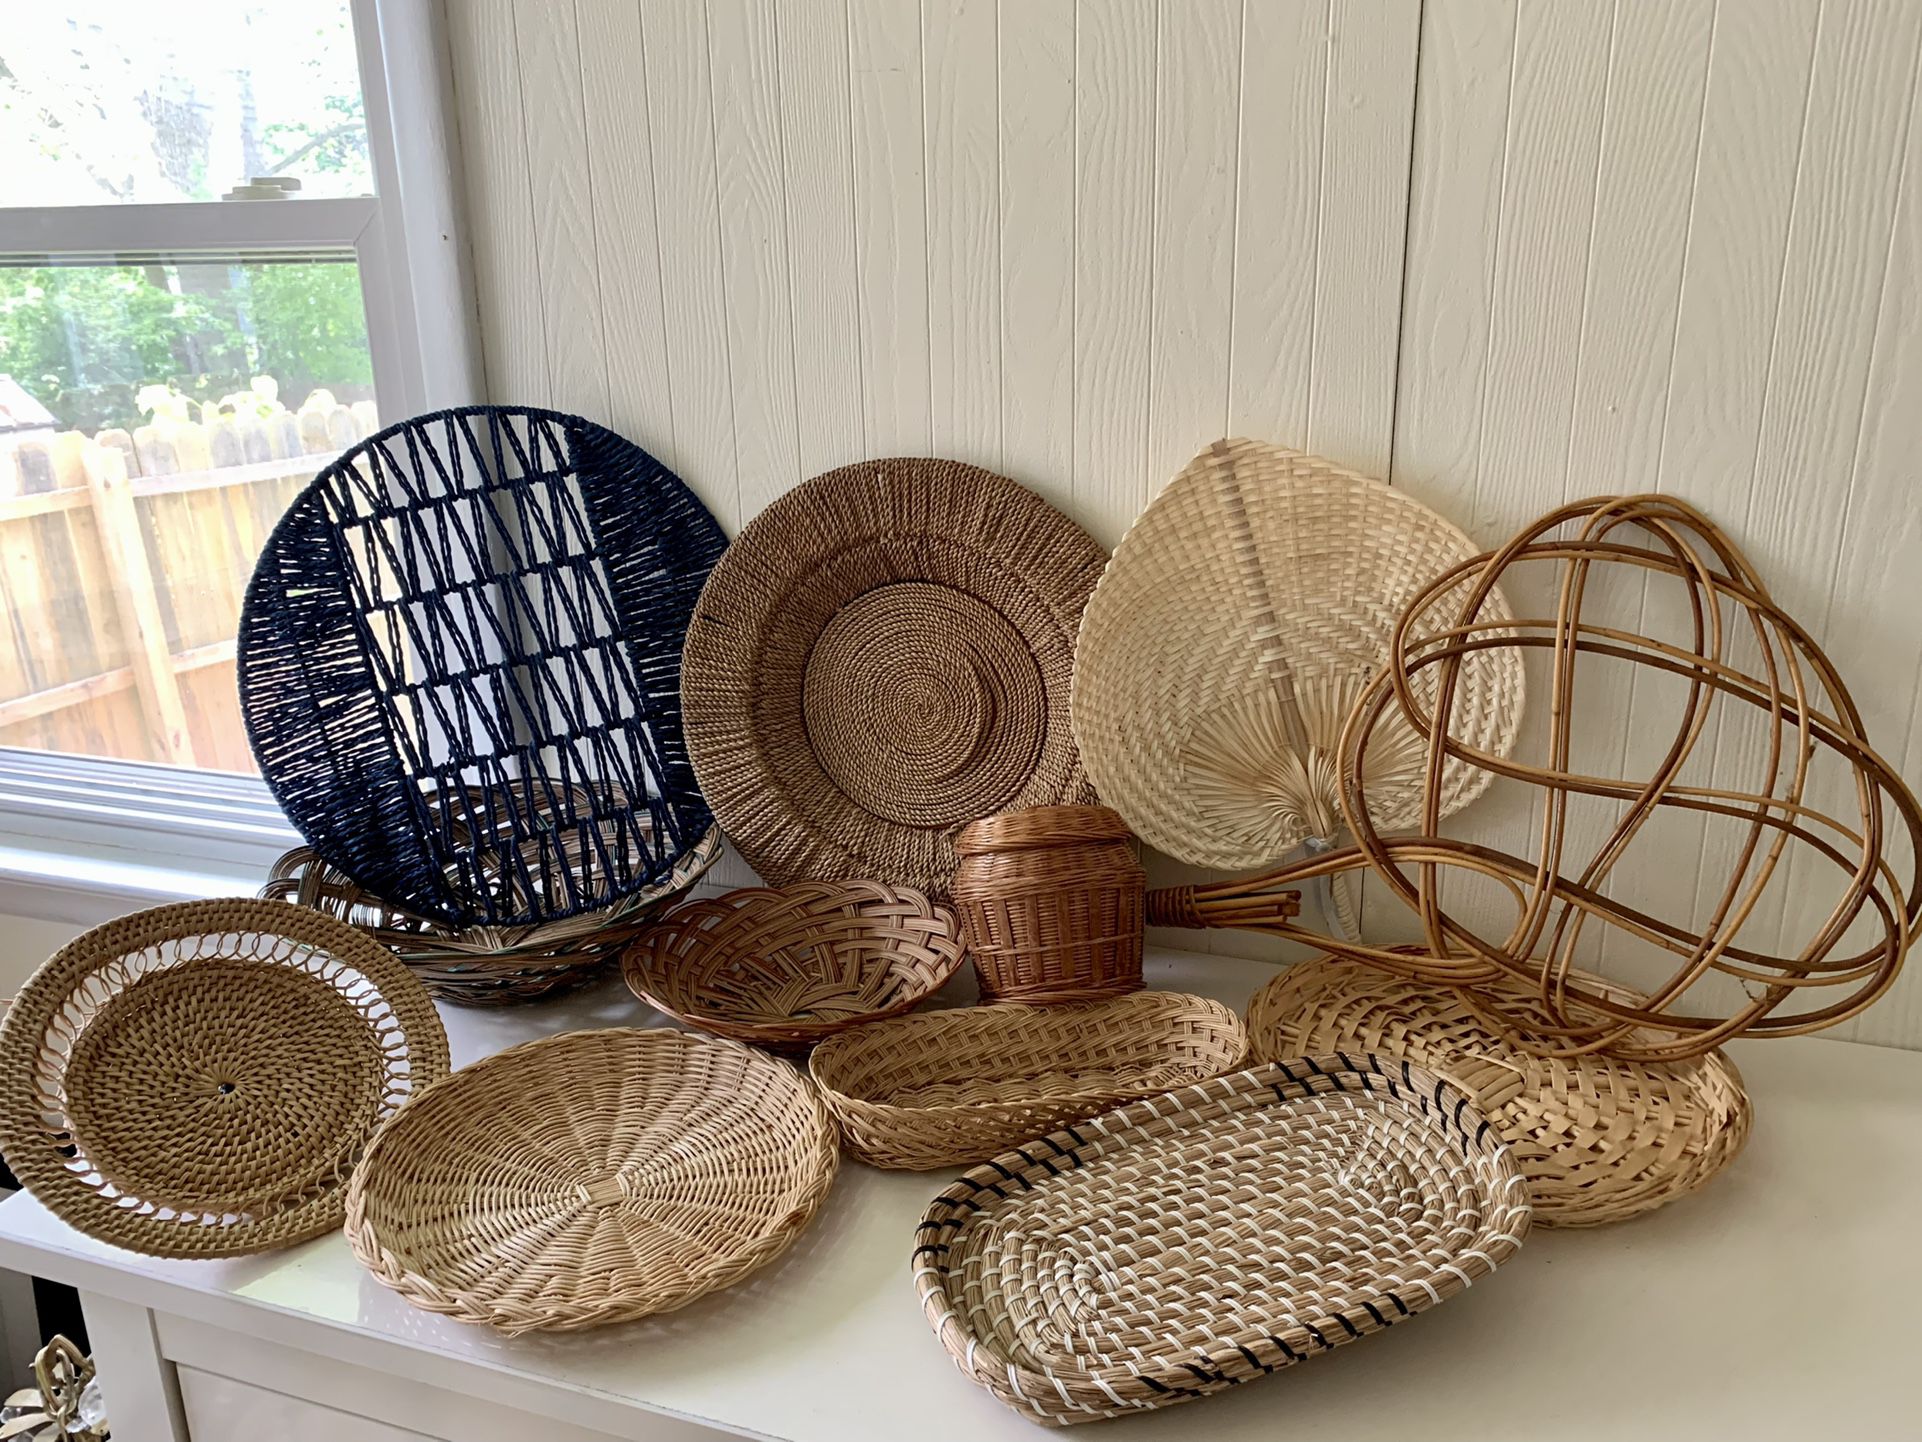 Wicker Weaved Rattan Baskets Trays Bins Placemats Planters Hanging Wall Art Boho Decor Bohemian Chic